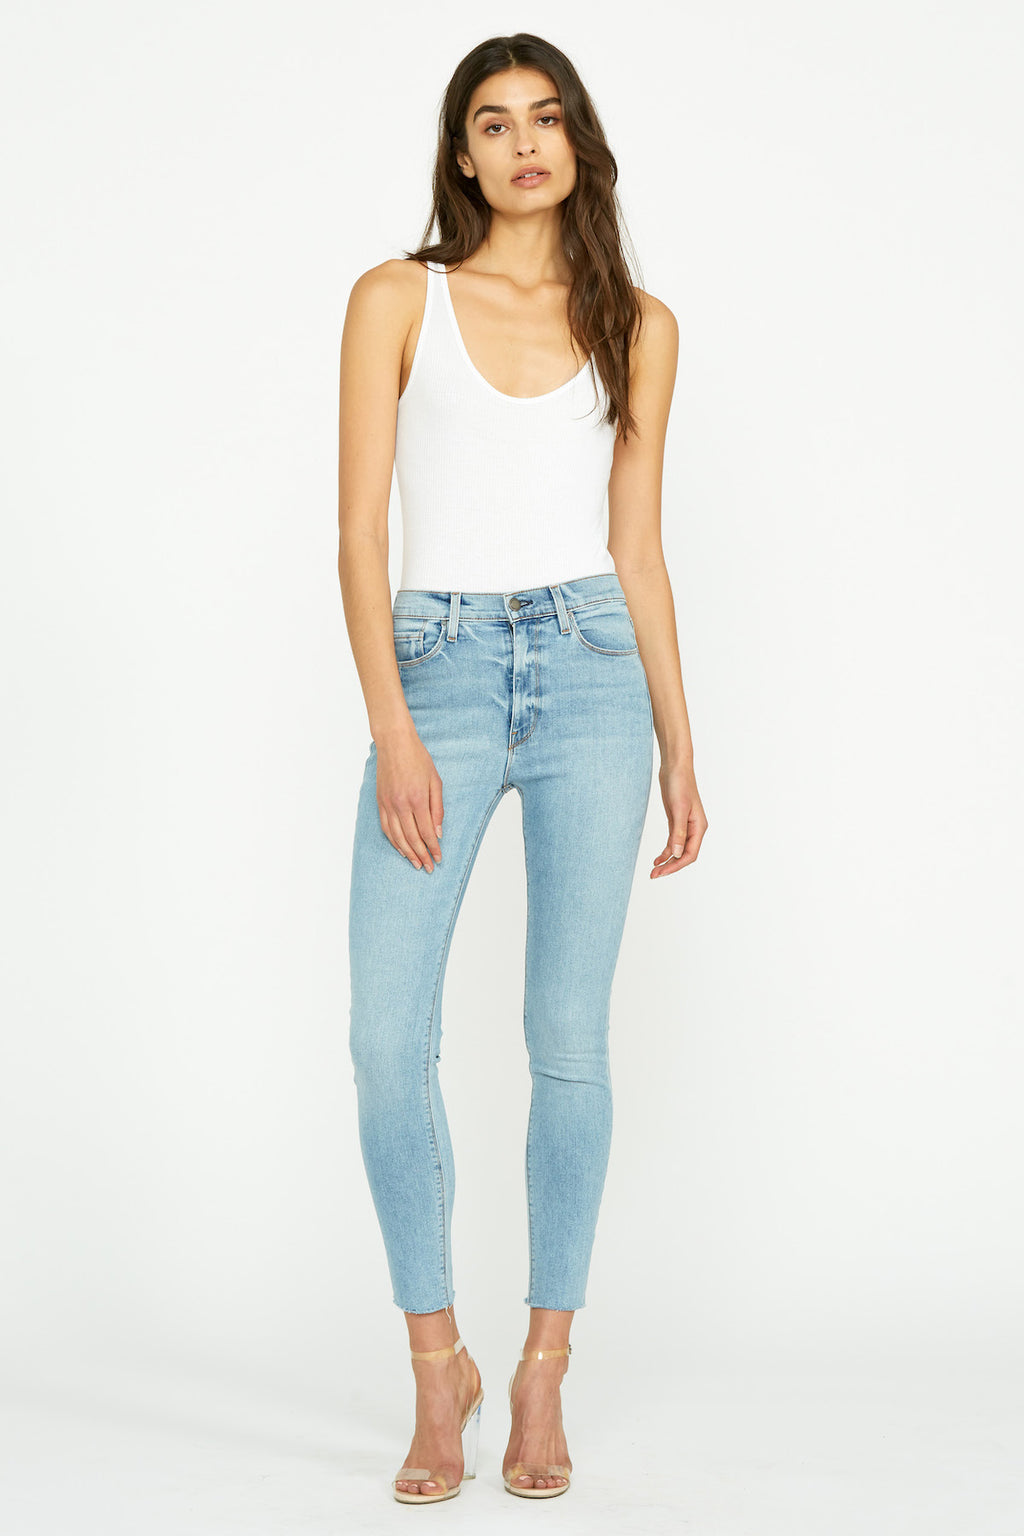 Women's Denim Highrise – Hudson Jeans